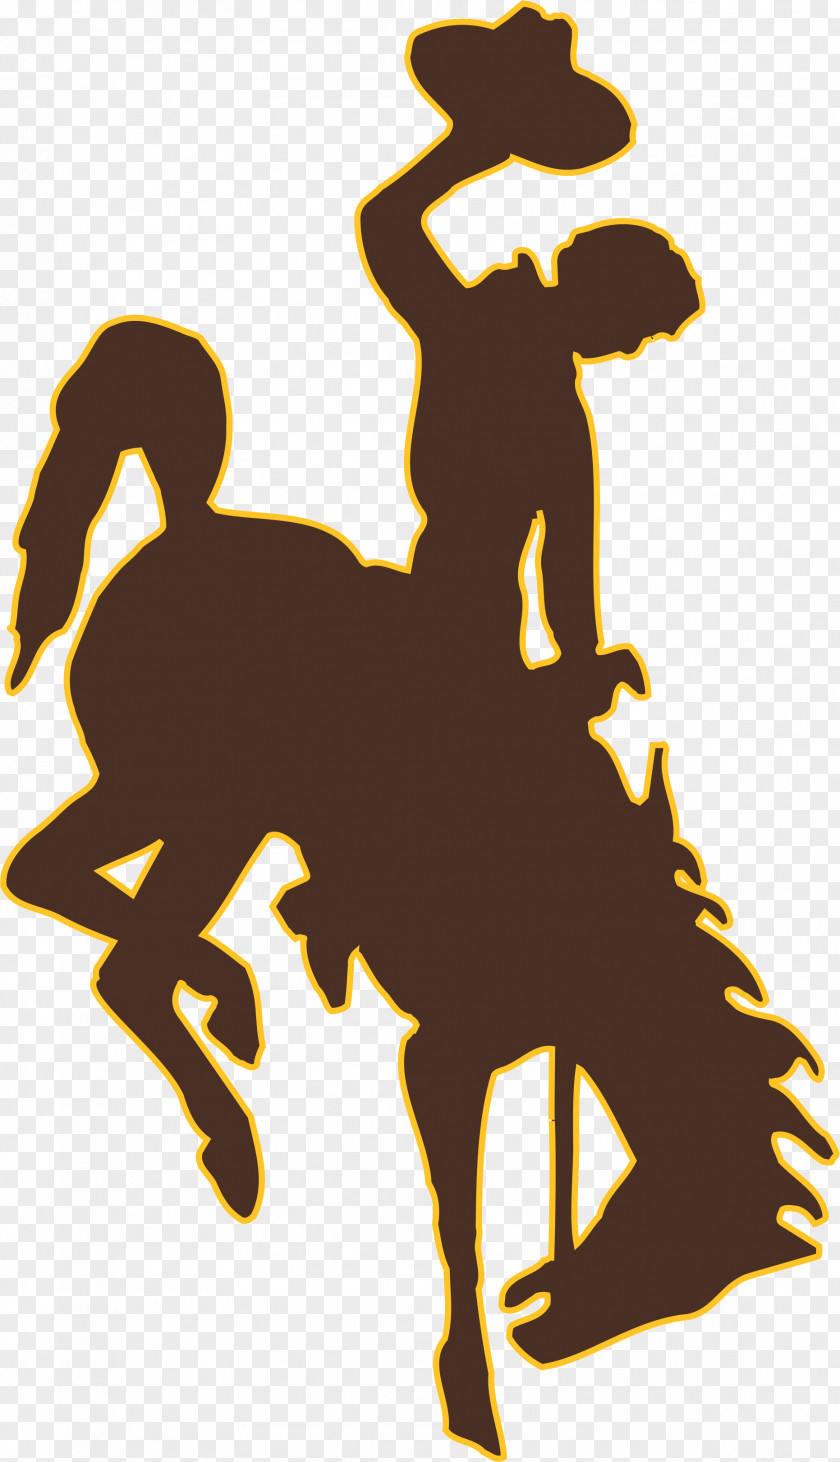 Texas Cowboy Shooting Wyoming Cowboys Football Jackson Hole High School University Of Athletic Ticket Office University-Wyoming Alumni PNG